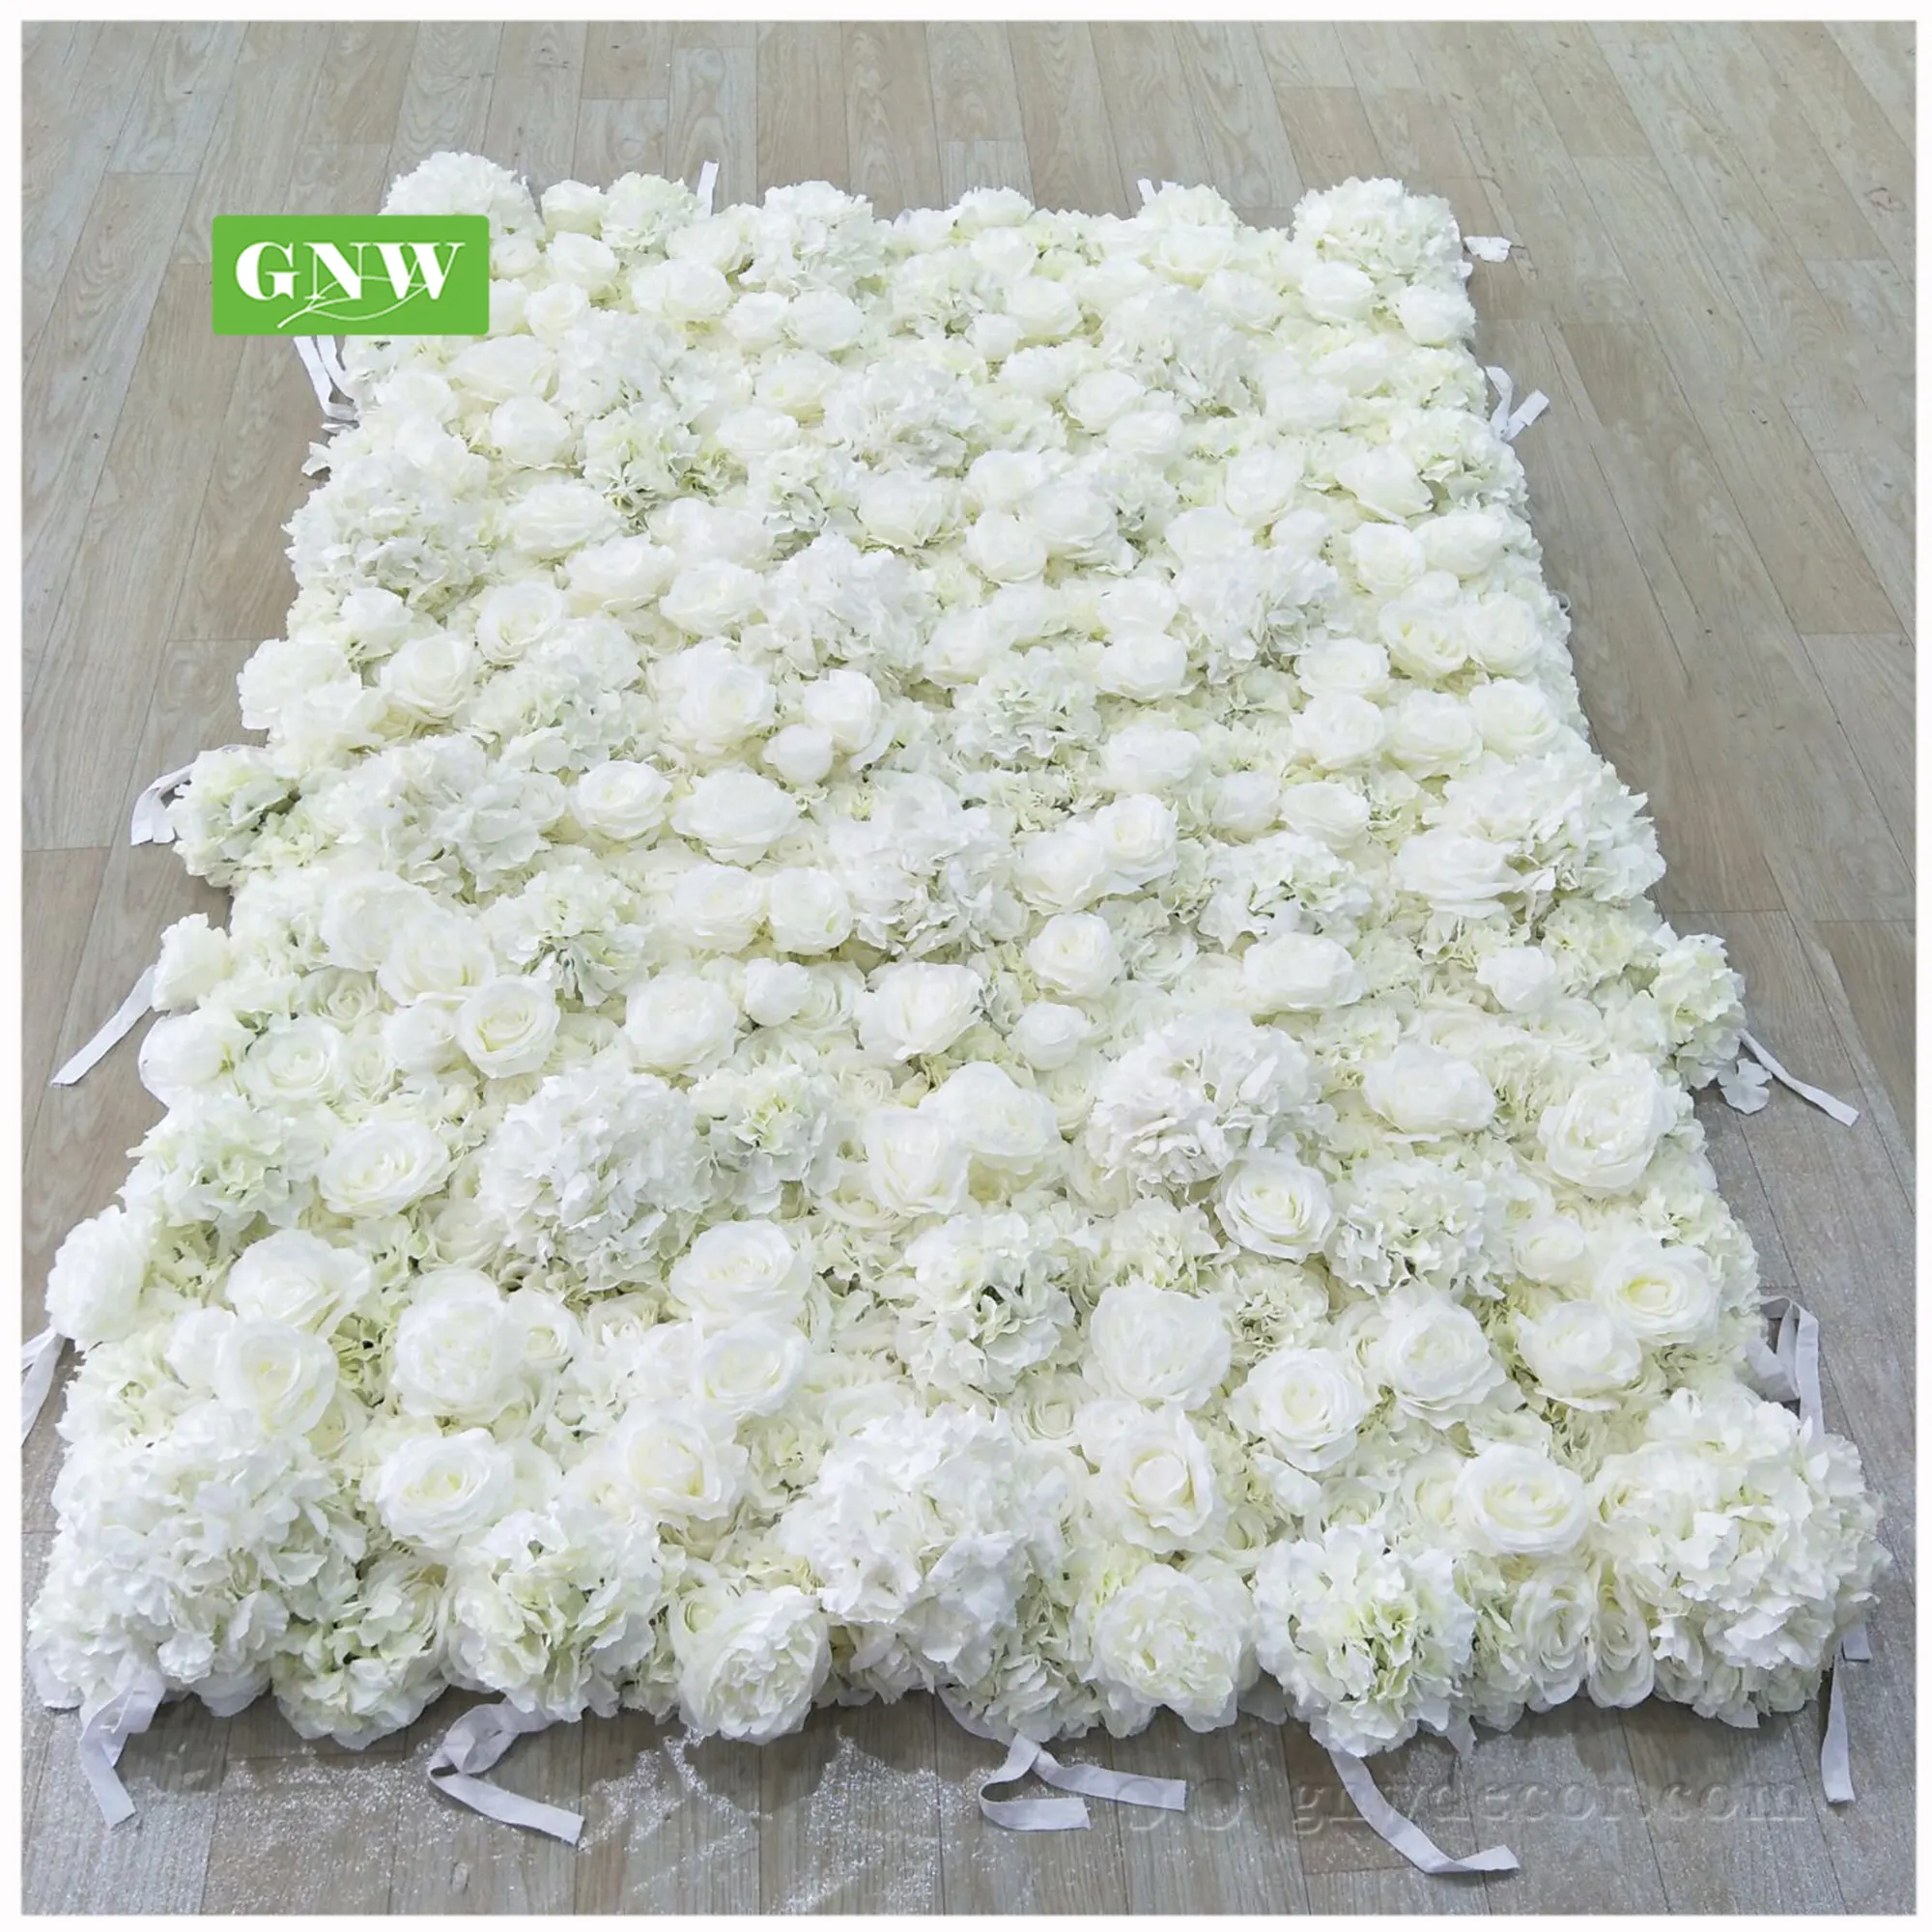 GNW Artificiale di cerimonia nuziale Bianco del fiore di cerimonia nuziale decorazione floreale della parete artificiale composizioni floreali